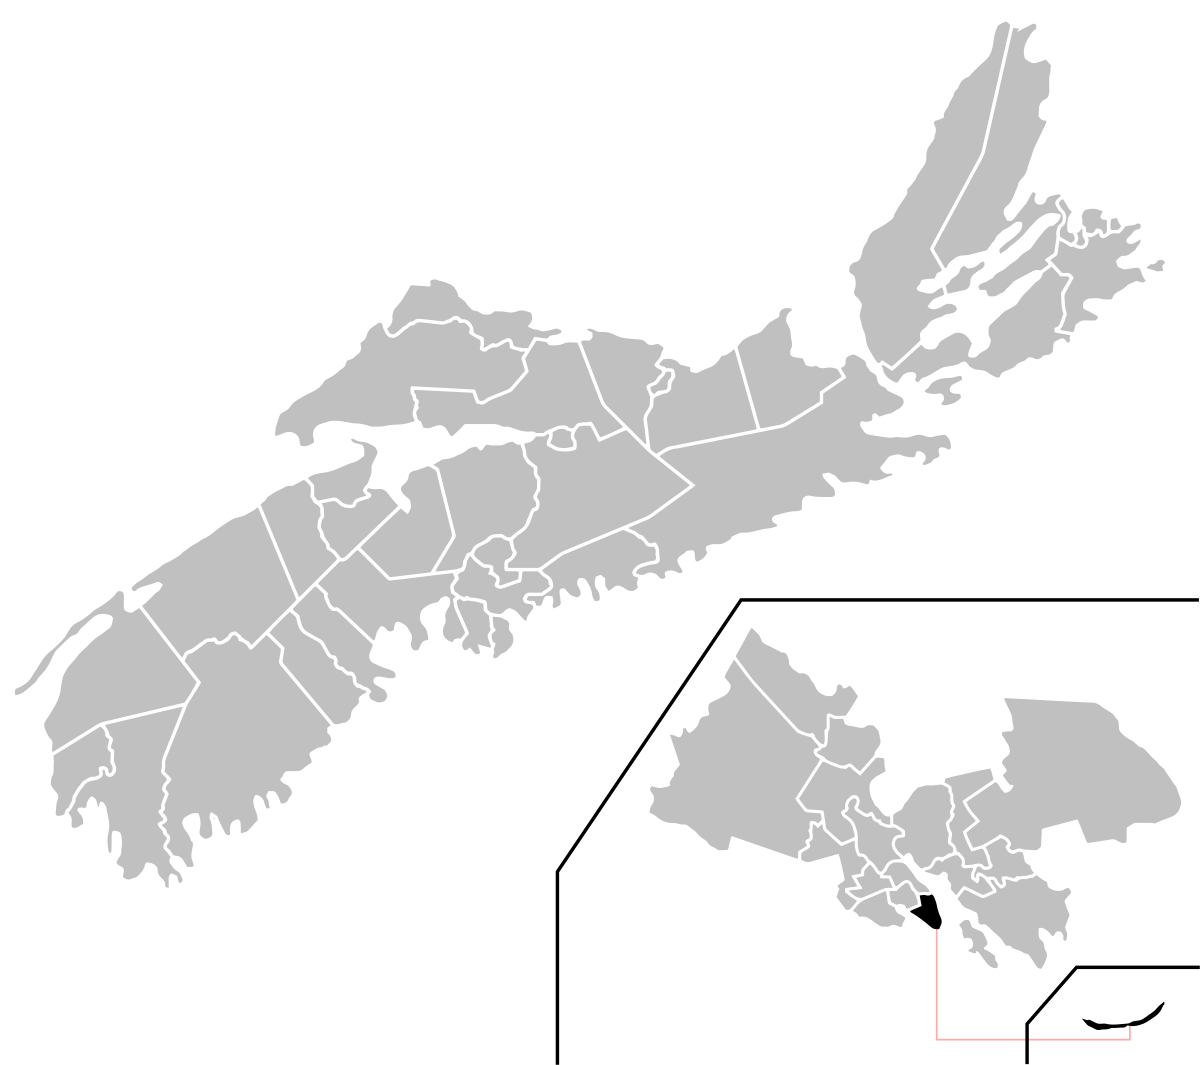 Halifax Citadels - Wikipedia